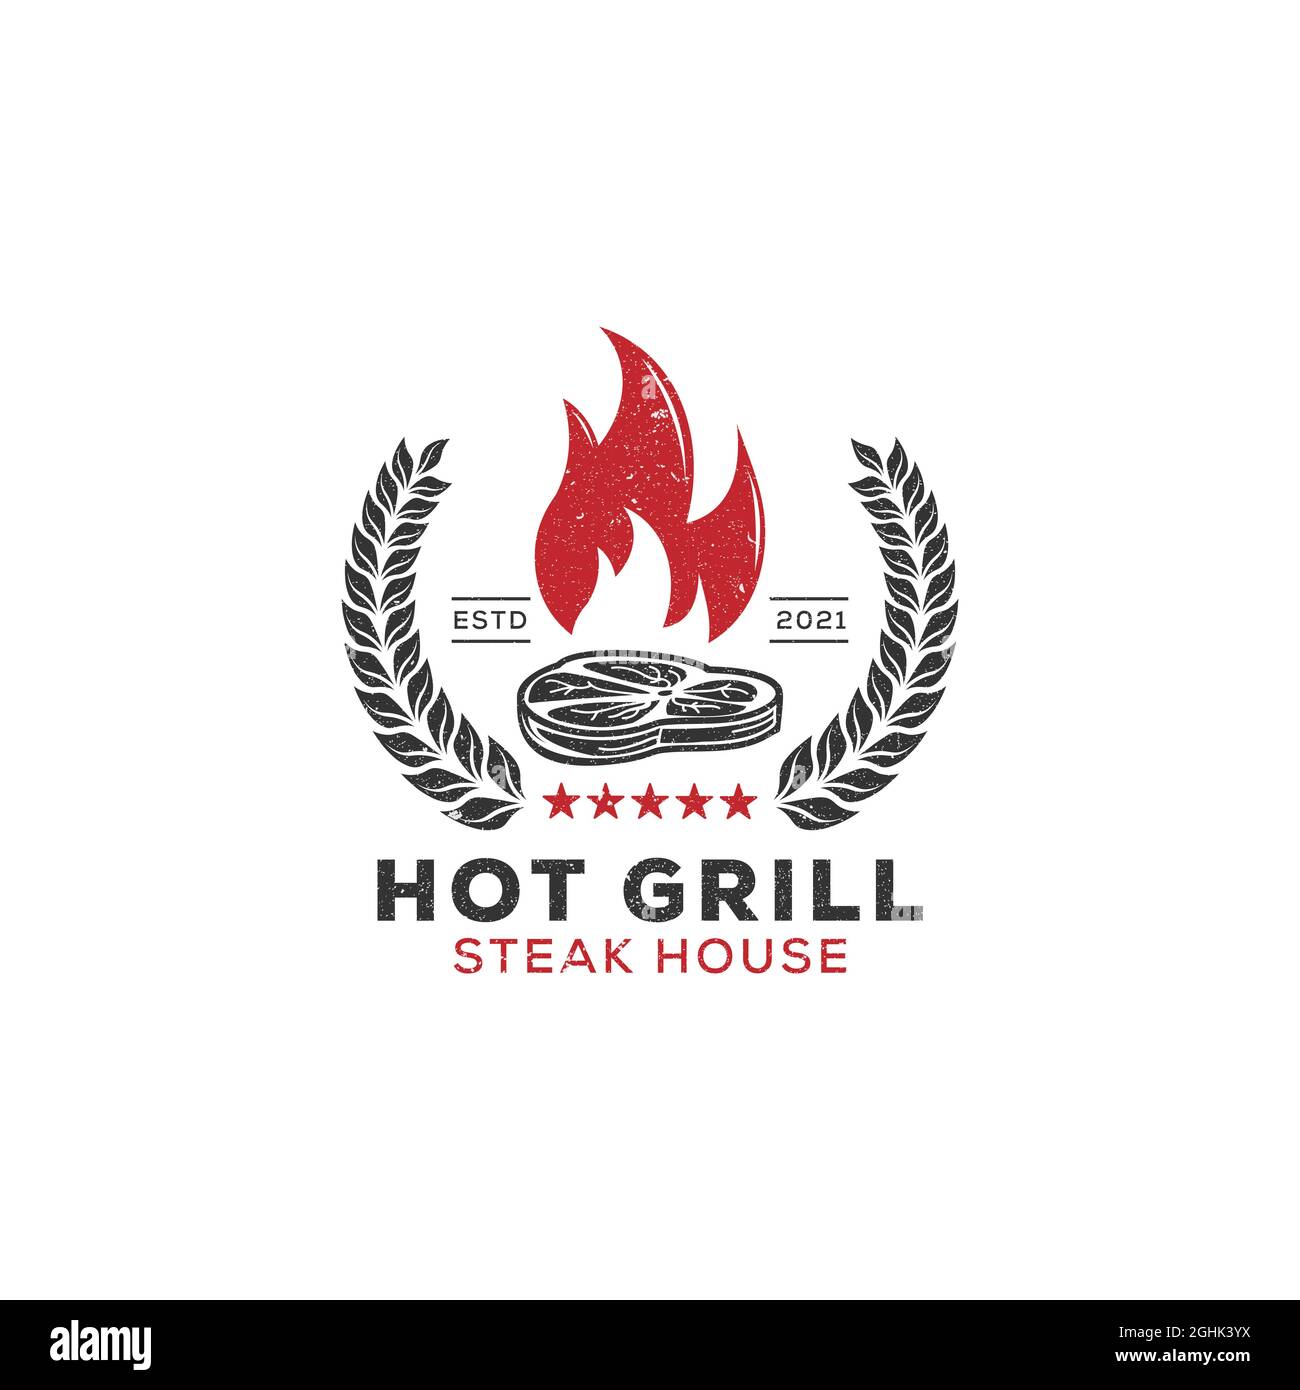 Hot Grill Steak House vintage Logo Designs, Fleisch Grill Restaurant rustikalen Vektor-Illustration Stock Vektor